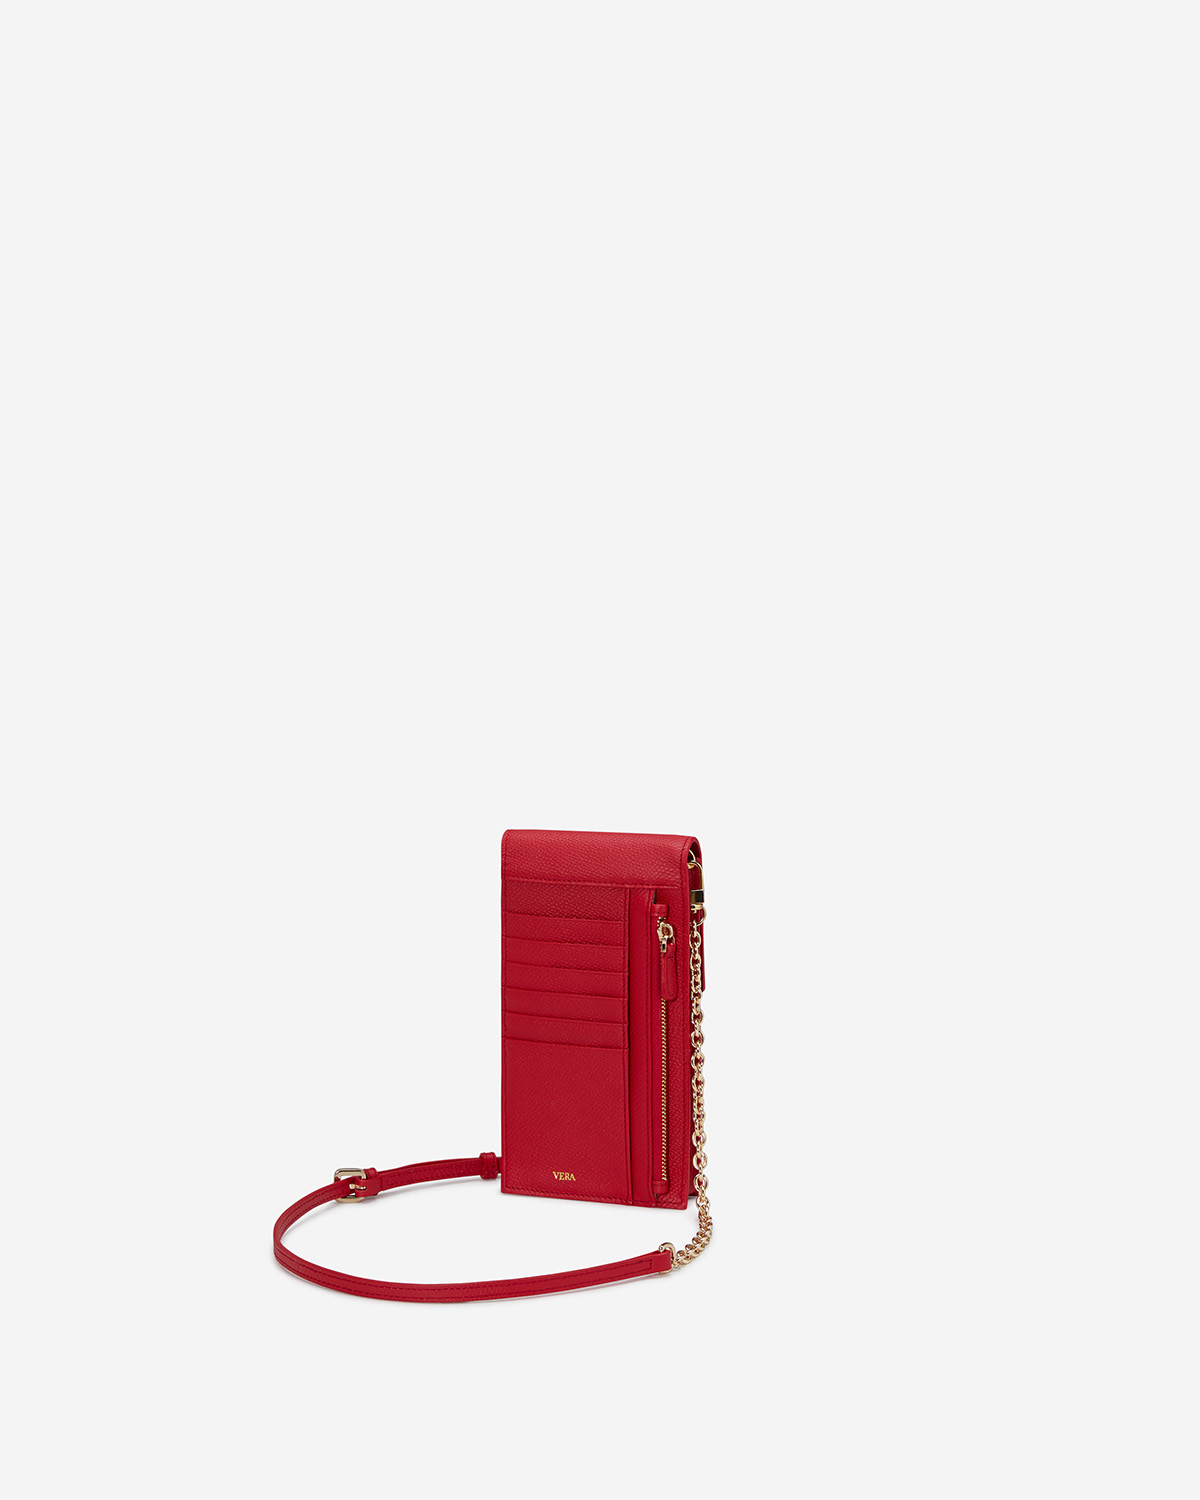 VERA Emily Phone Pouch with Leather Gold Chain in Passionate Red กระเป๋าใส่โทรศัพท์หนังแท้ พร้อมฟังก์ชั่นกระเป๋าสตางค์ มาพร้อมสายสะพายโซ่หนังถอดได้ สีแดง